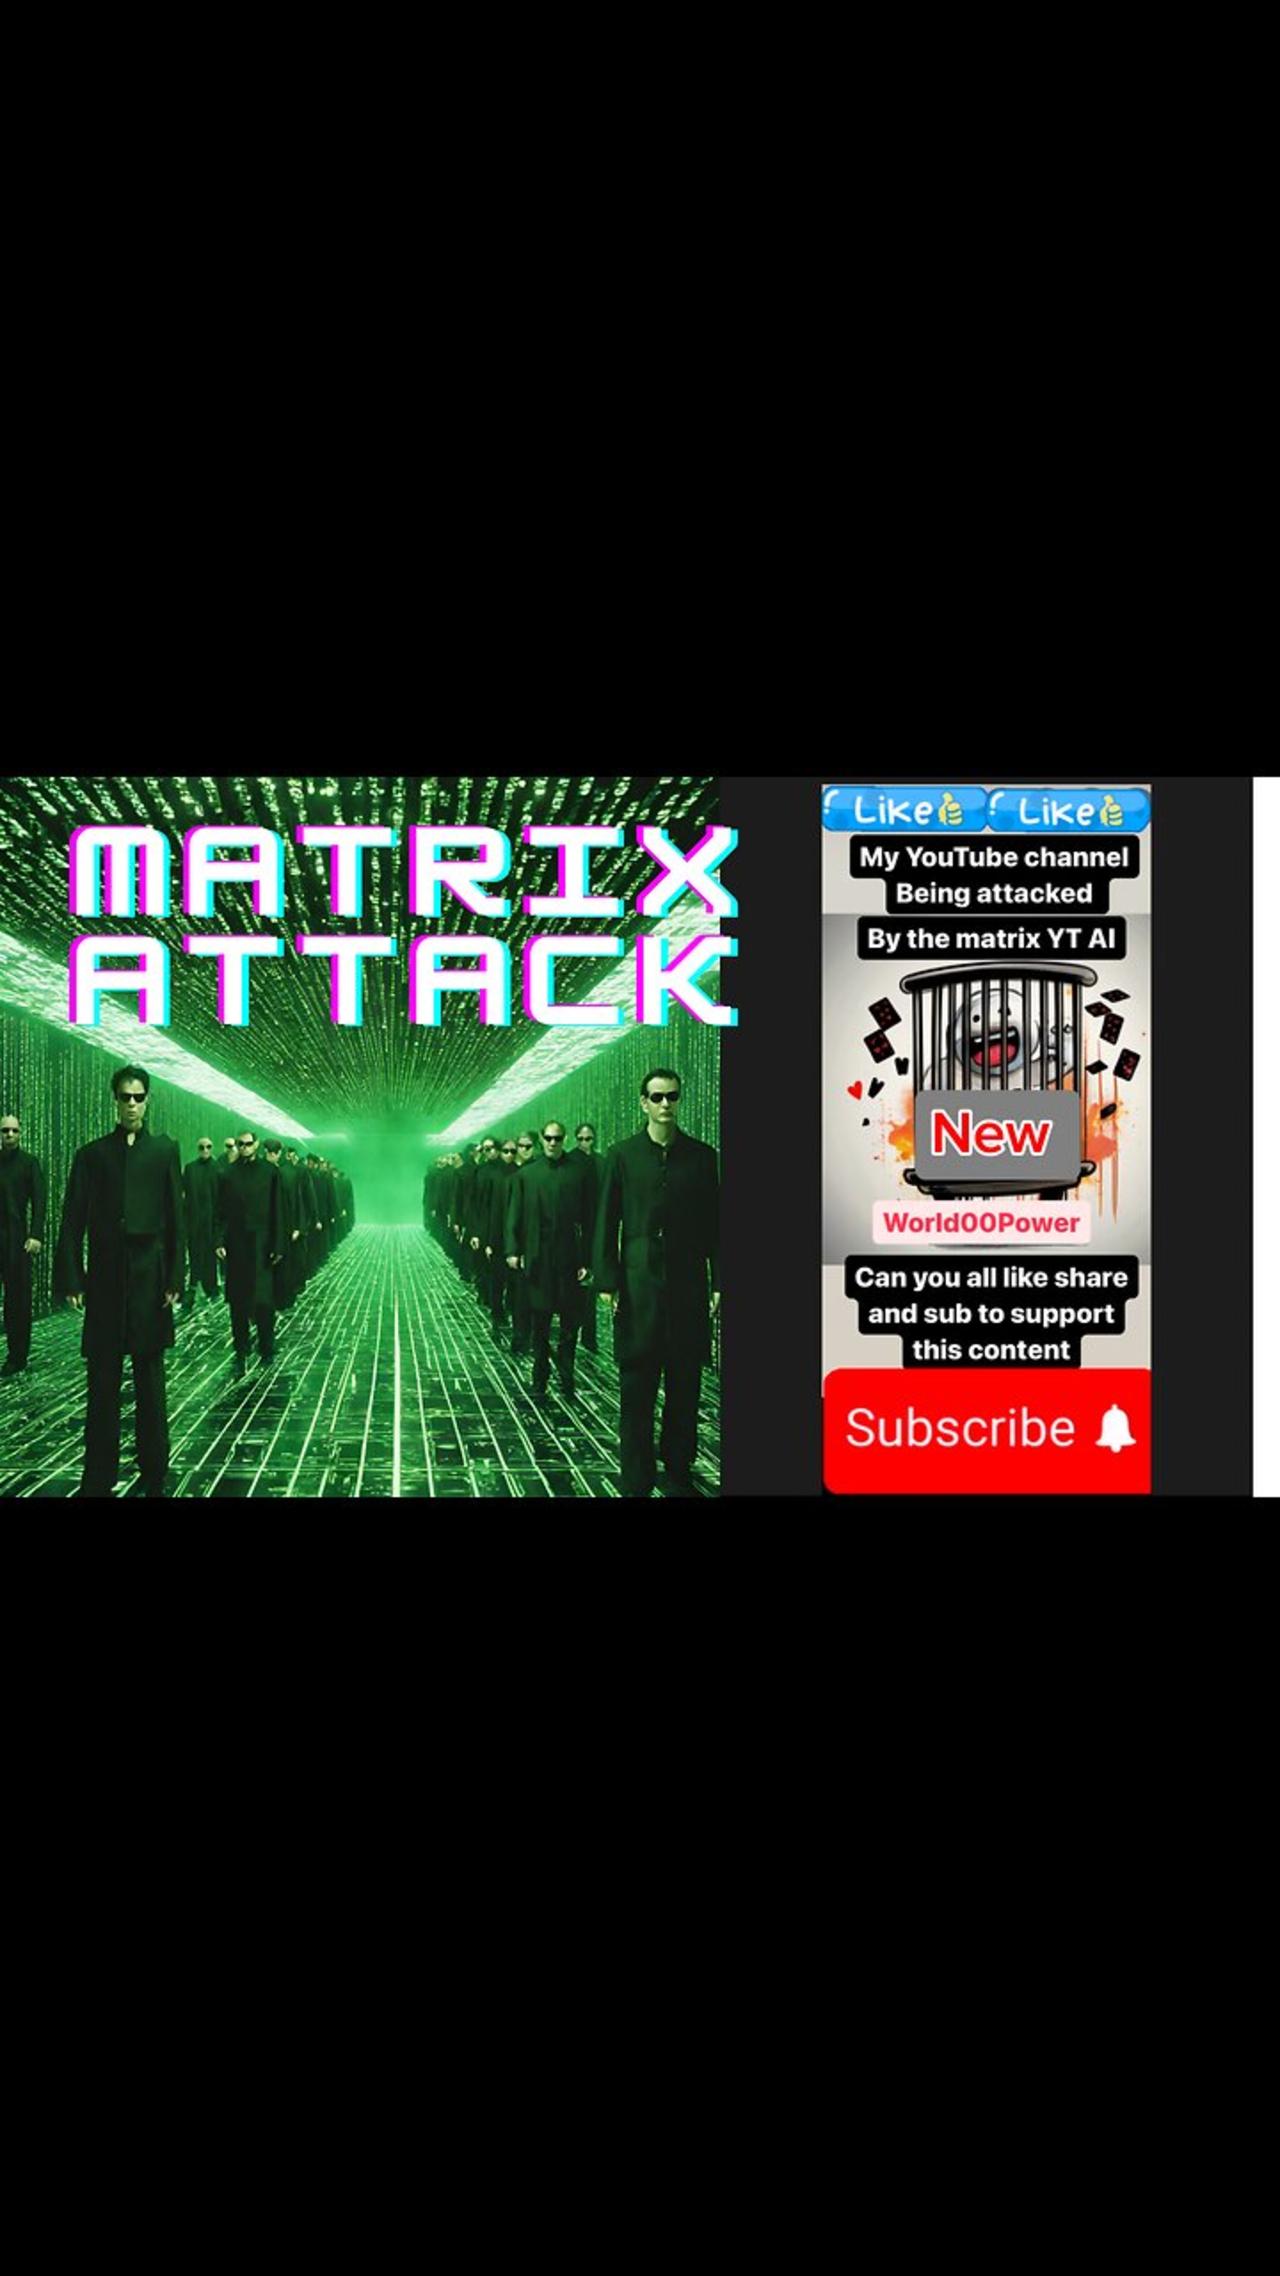 Update on My Matrix attacks